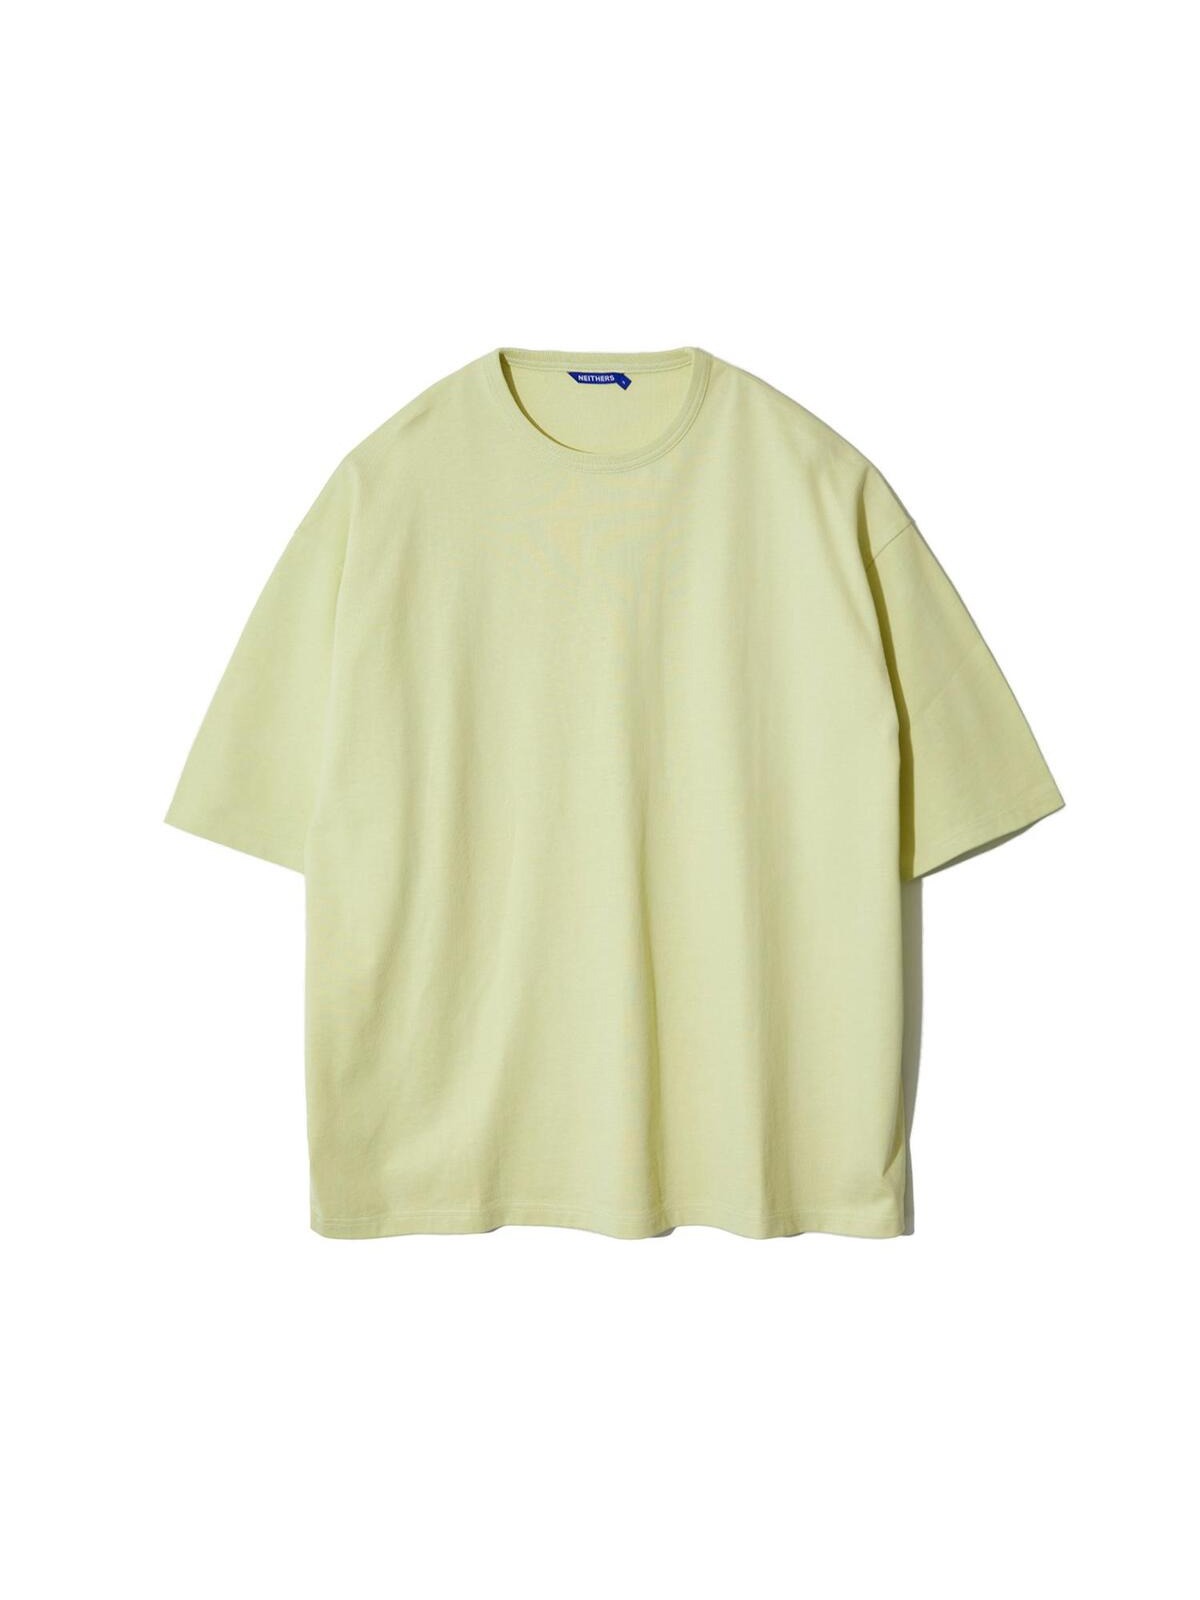 Oversized S/S T-Shirt (Melon)